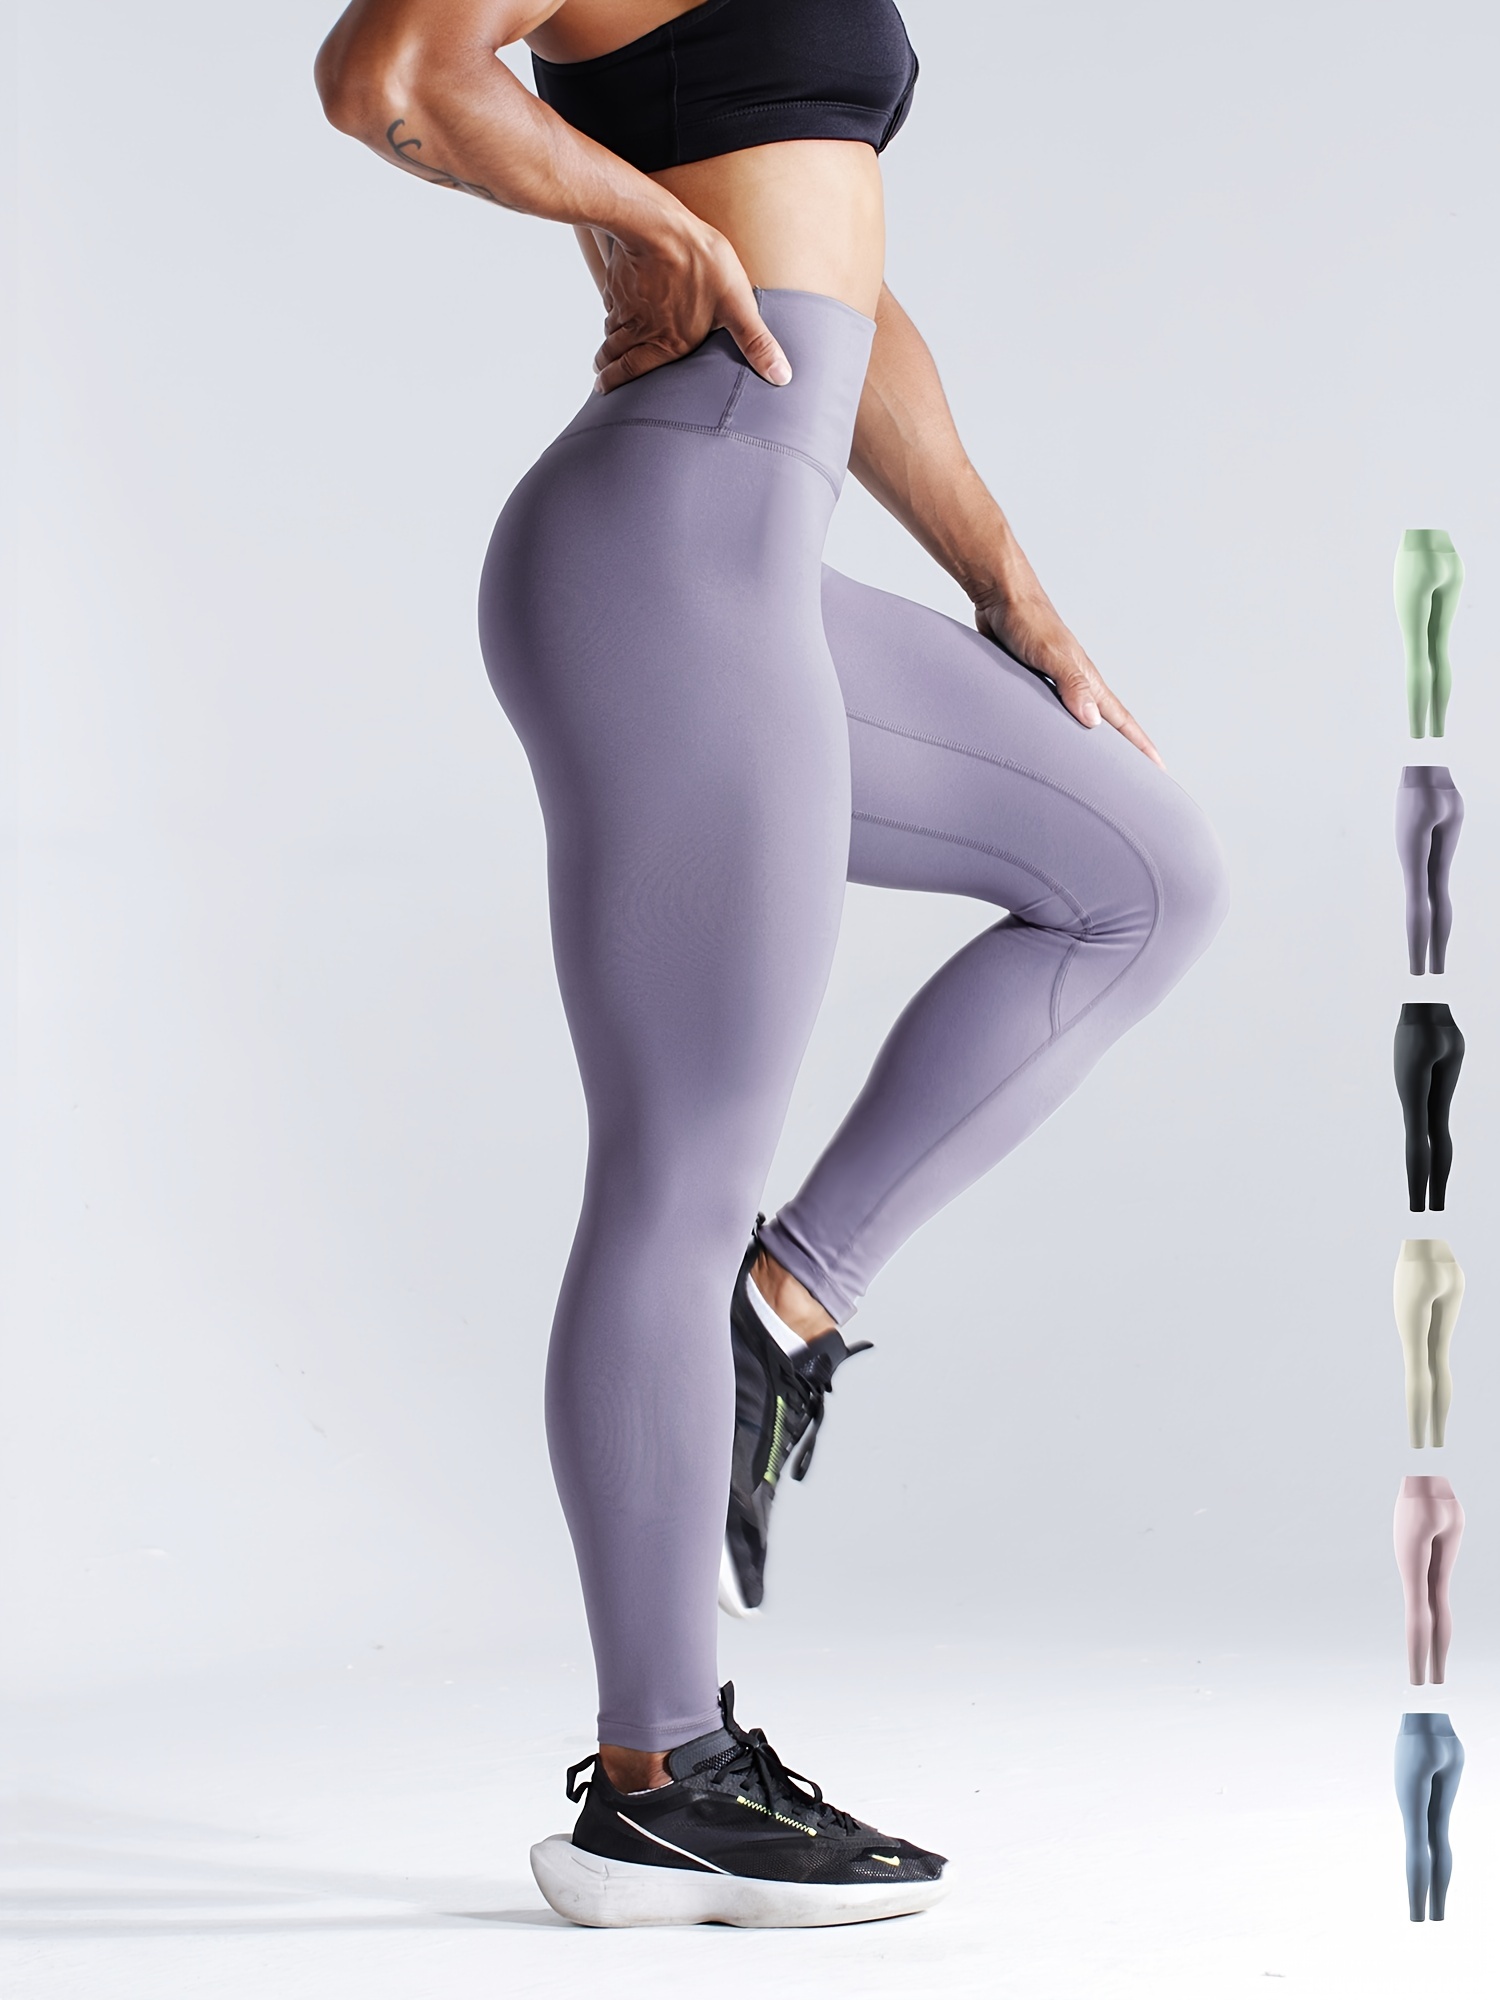 KIHOUT Women Solid Sport Fitness Yoga Pants Elasticity Breathable High  Waist Pants 